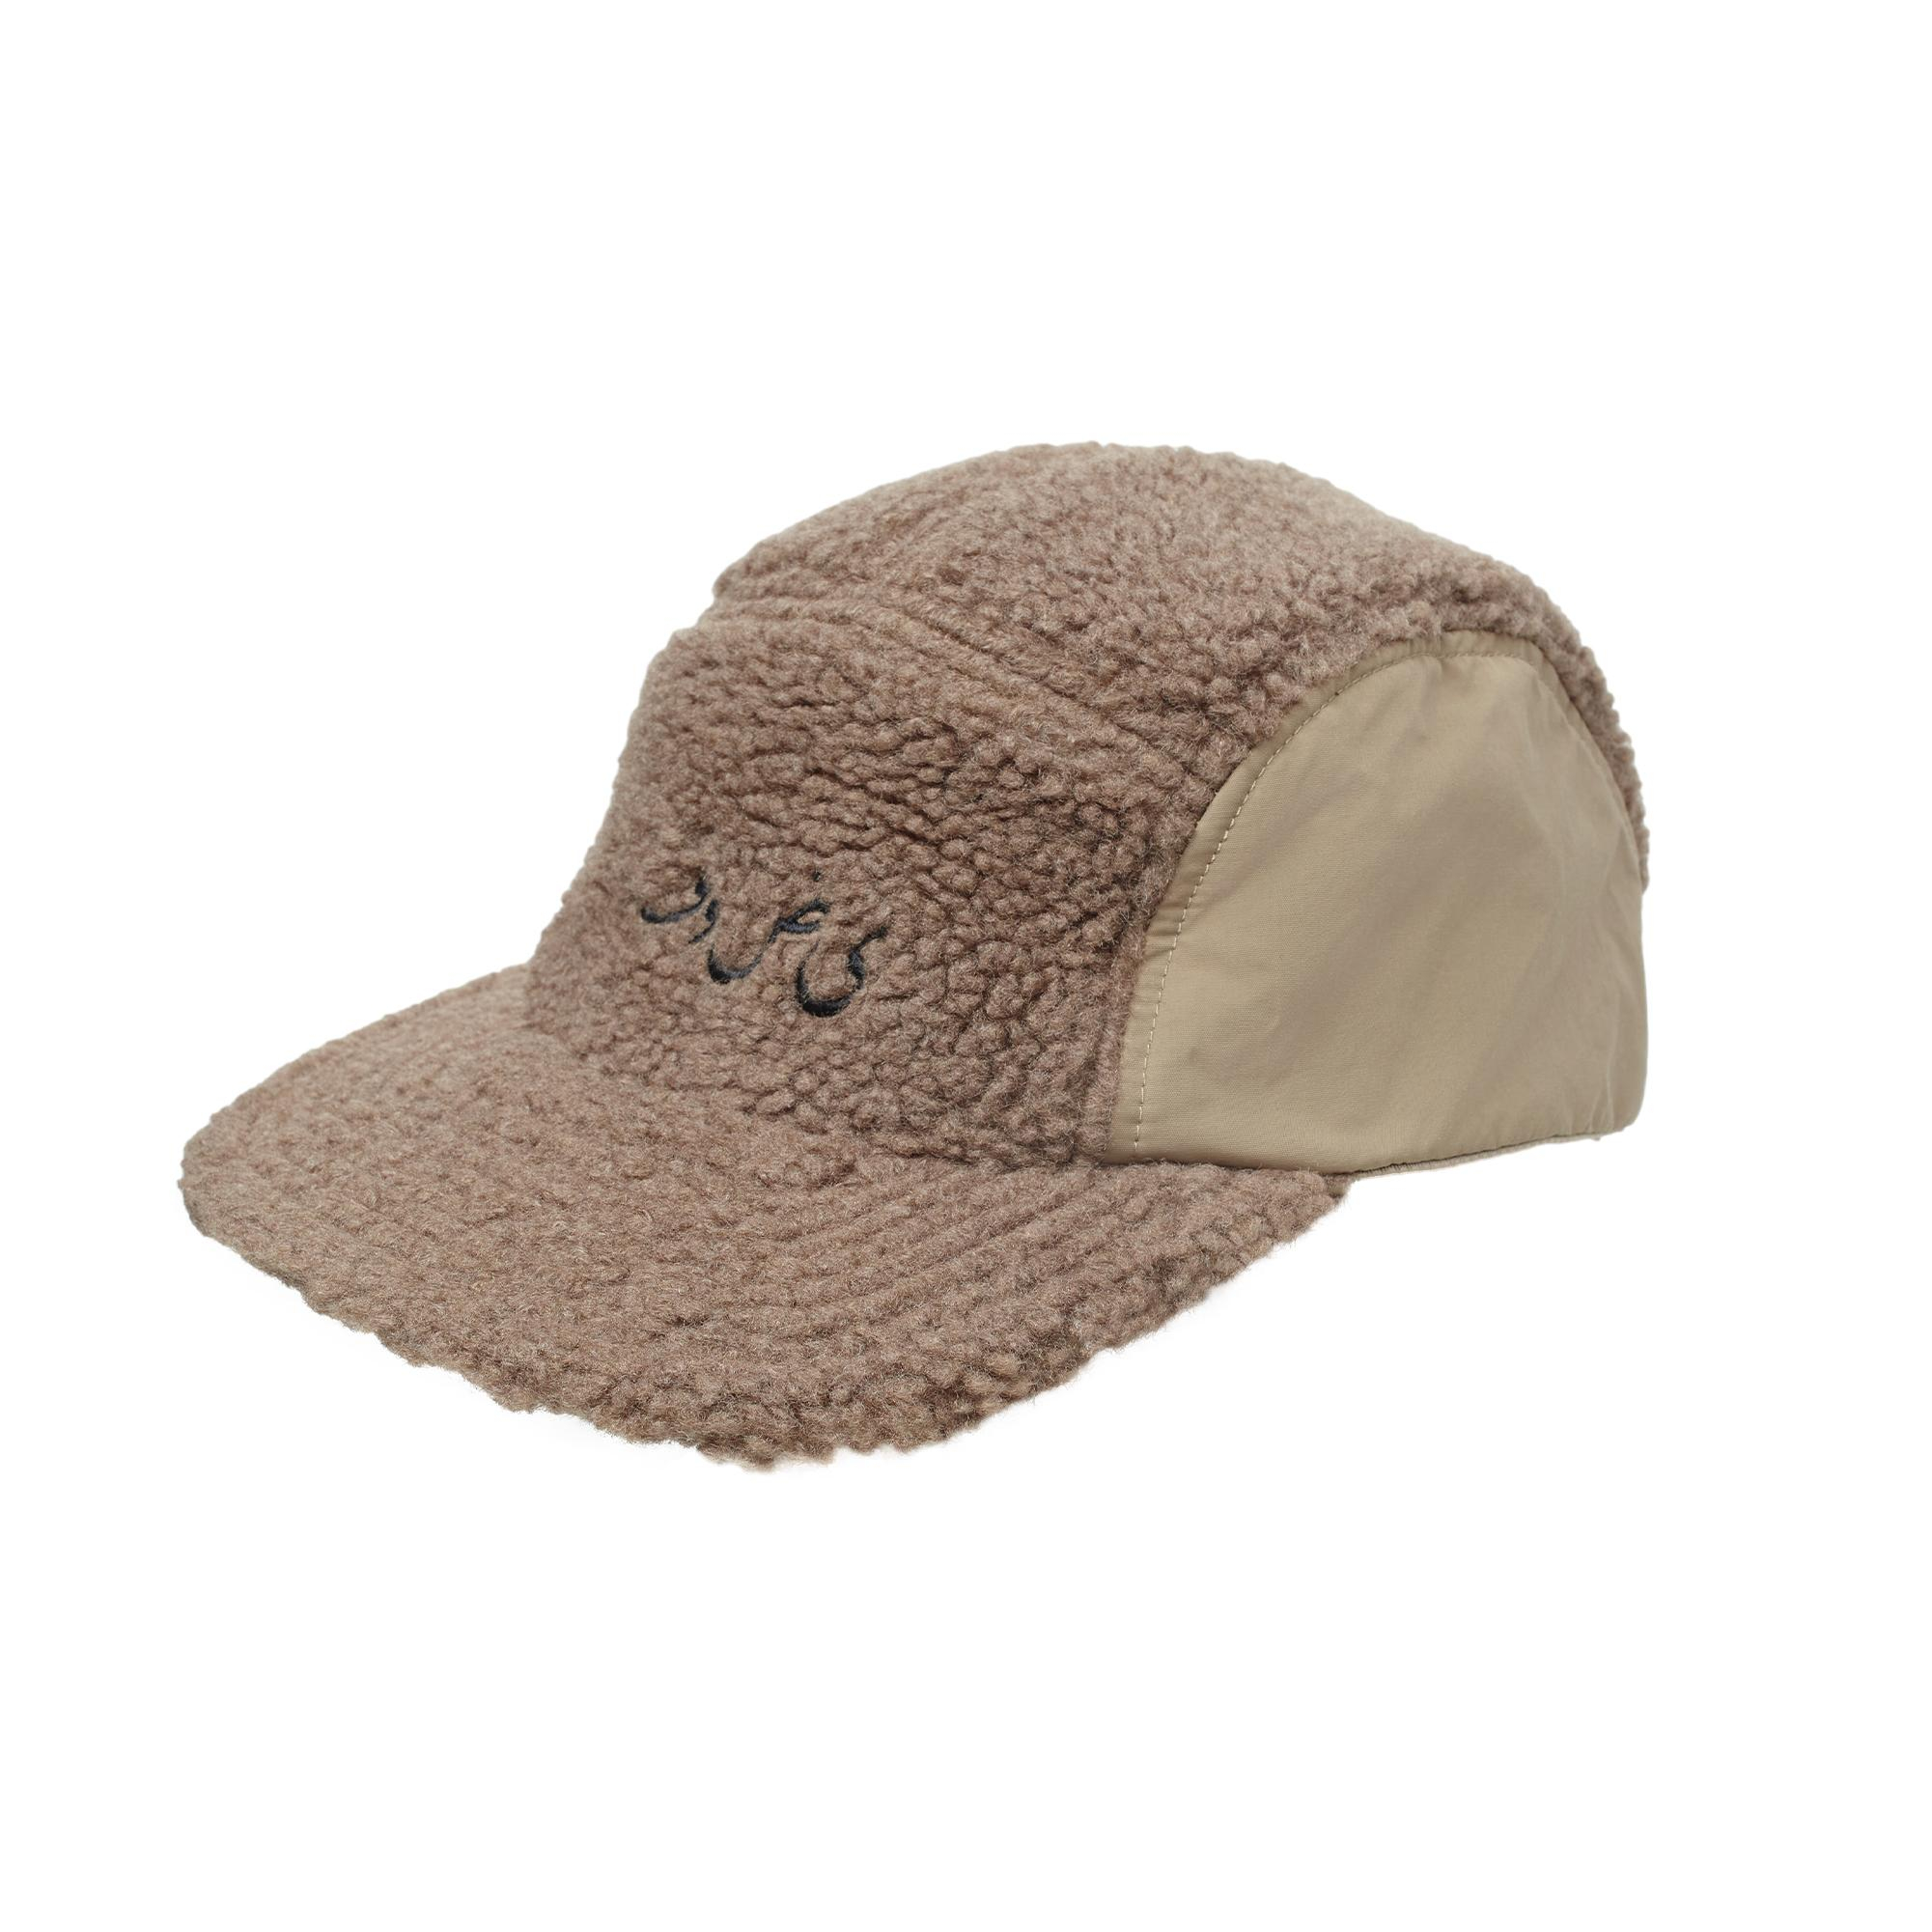 Комбинированная кепка с вышивкой Undercover UP2C4H01/BEIGE, размер One Size UP2C4H01/BEIGE - фото 1